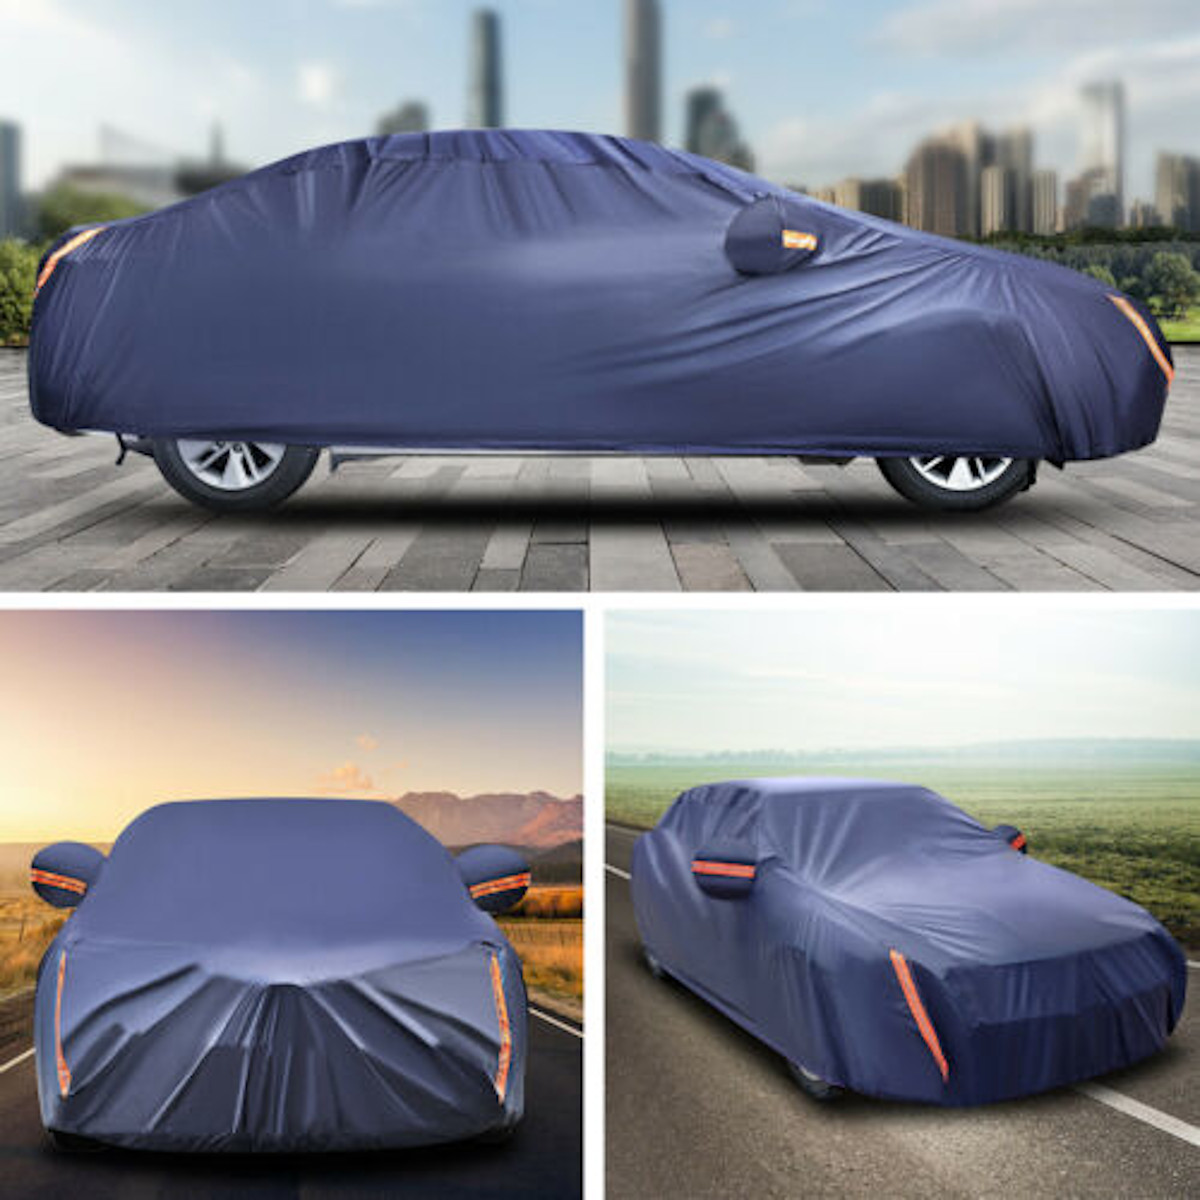 L 4.7x1.75x1.5M Three Box Car Universal Full Car Cover Waterproof Dustproof UV Resistant Stripes For Sedan